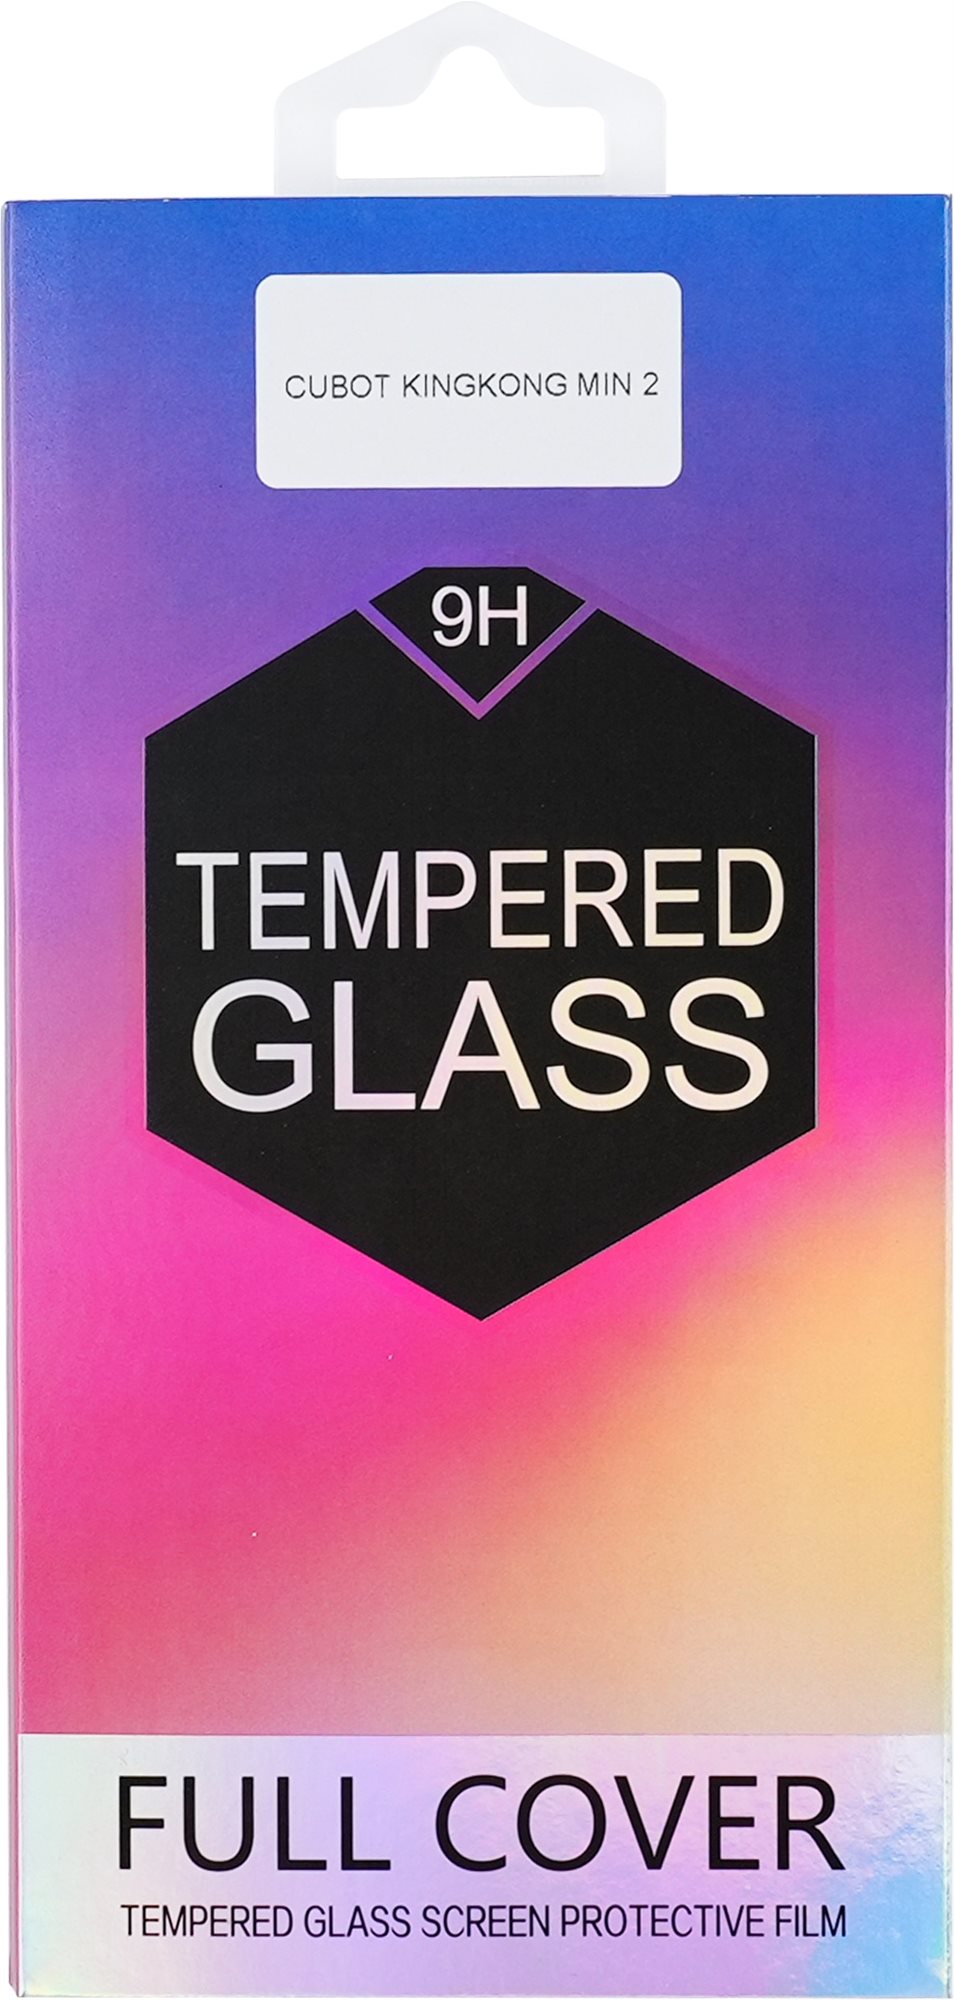 Cubot Tempered Glass King Kong 6 üvegfólia